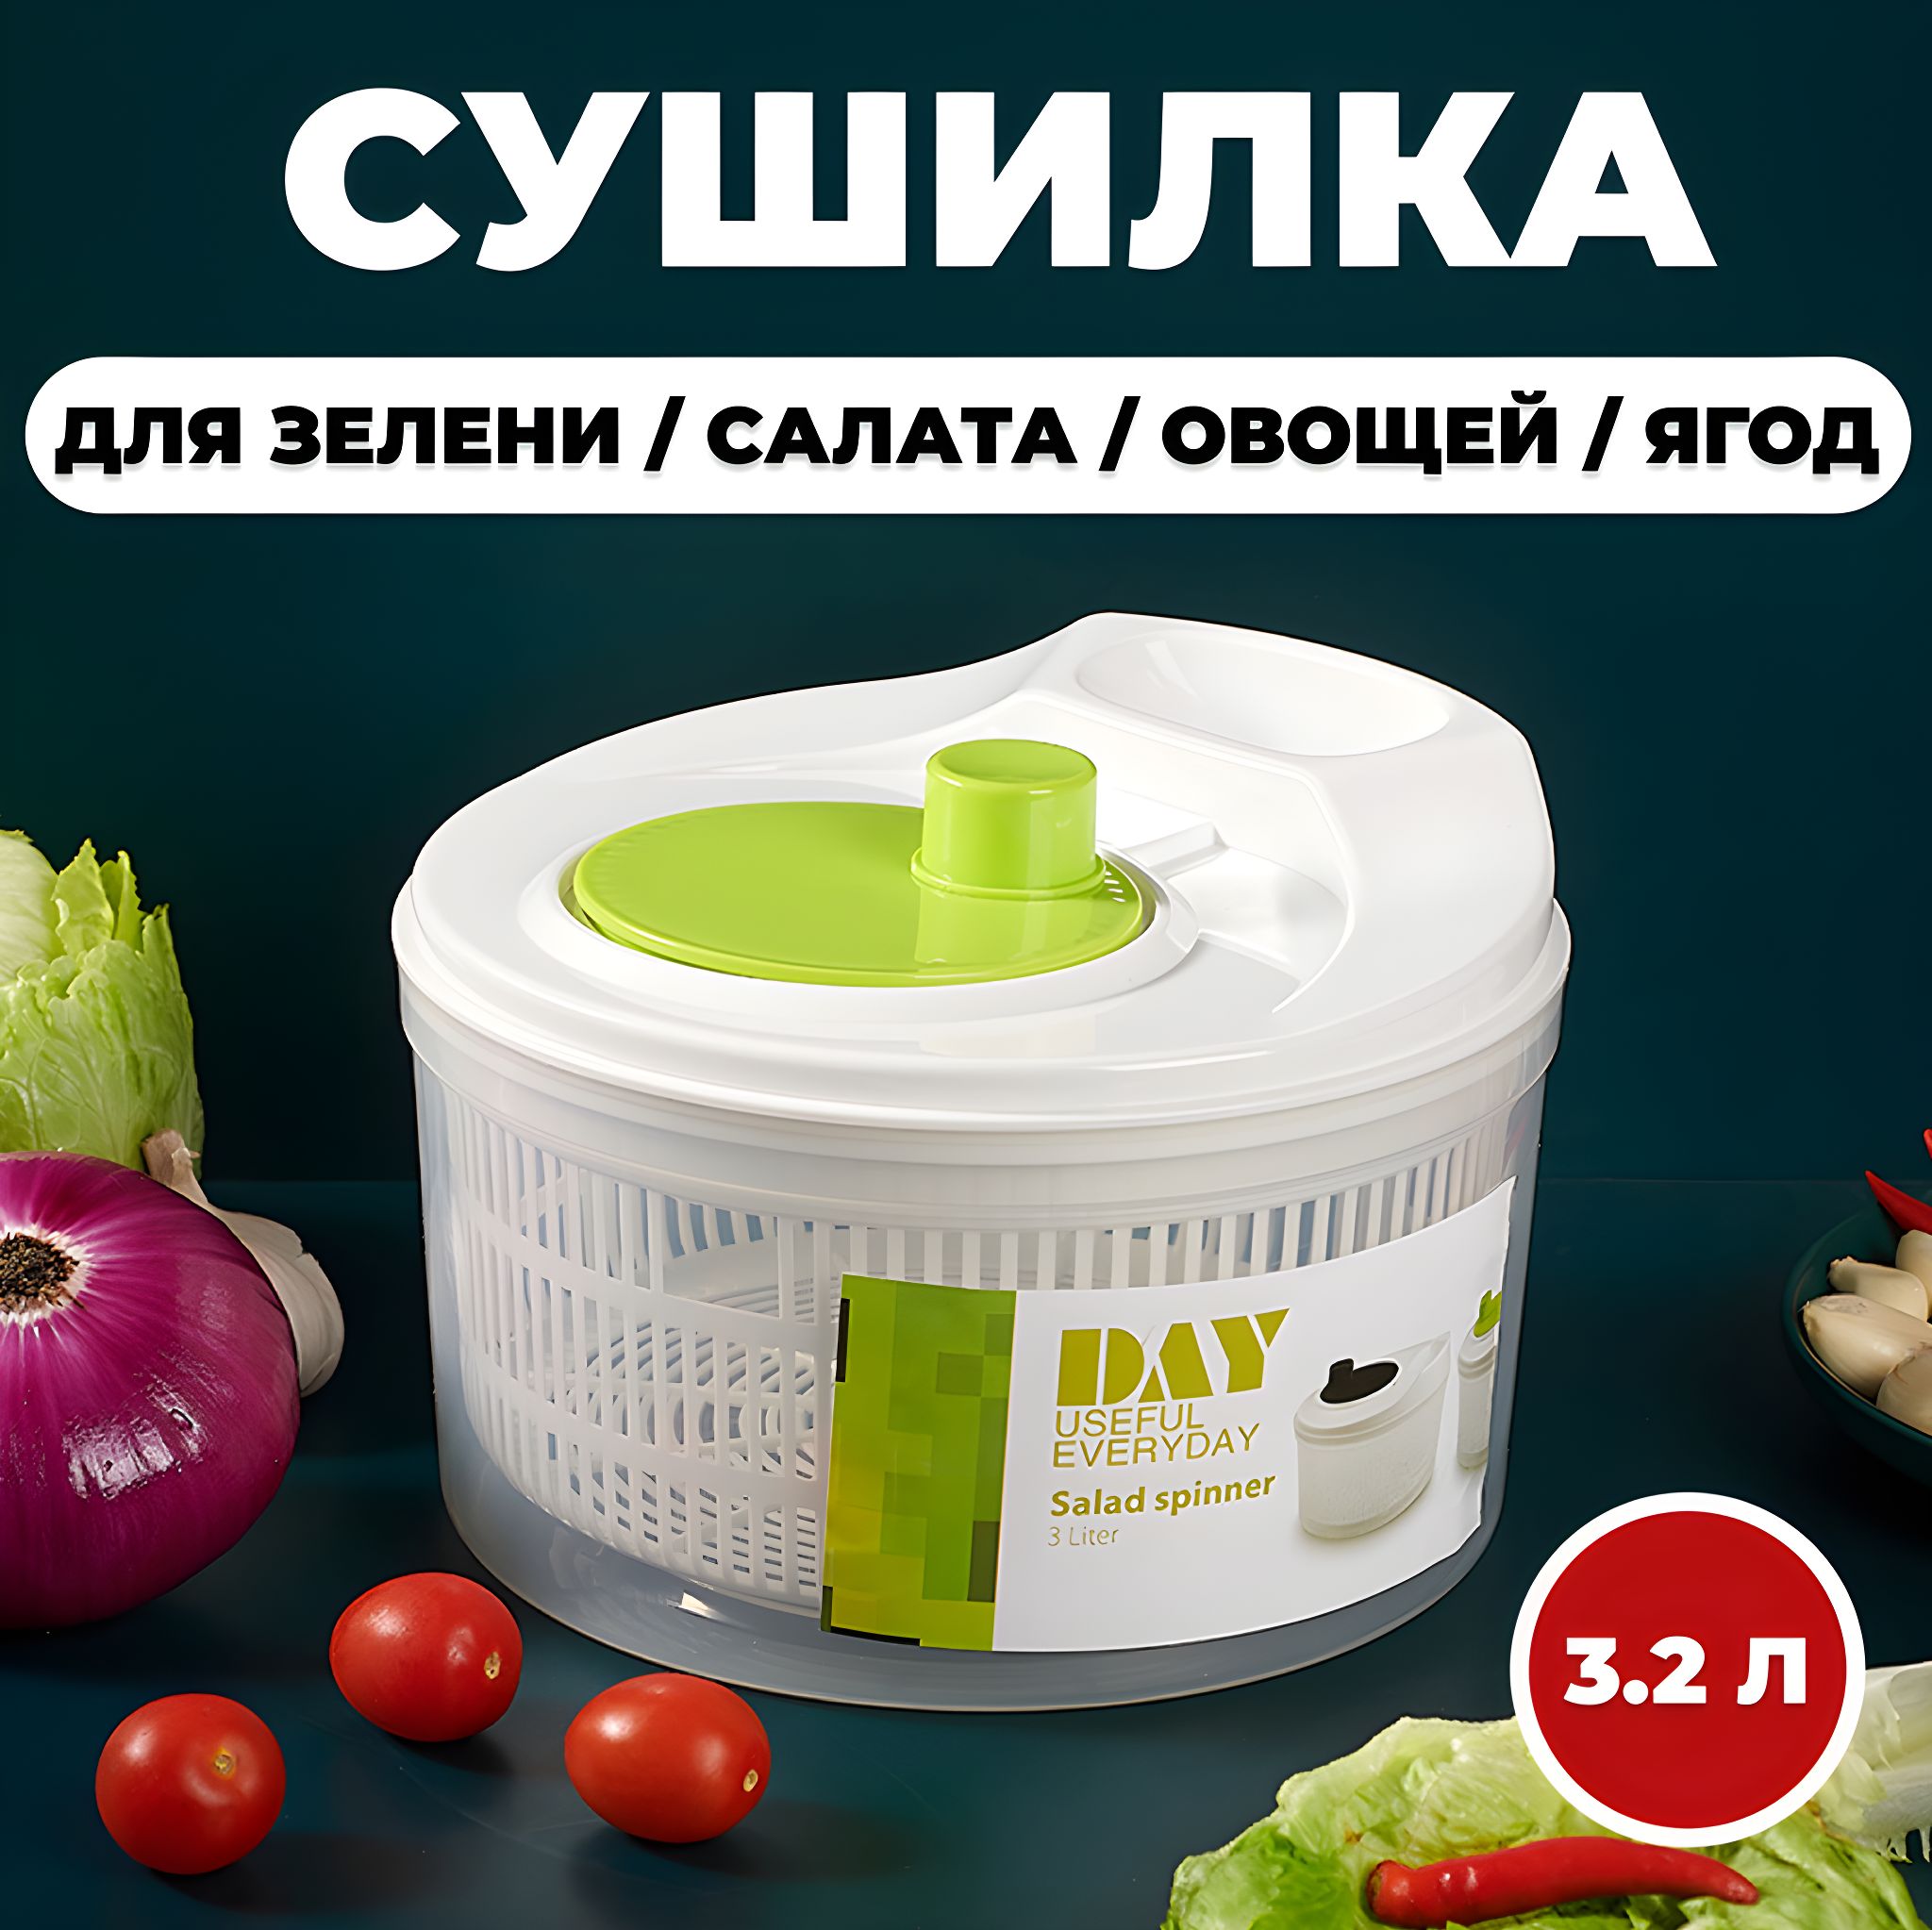 Сушилкадлясалата/овощей/фруктов/ягод,1ярусов,3,2л